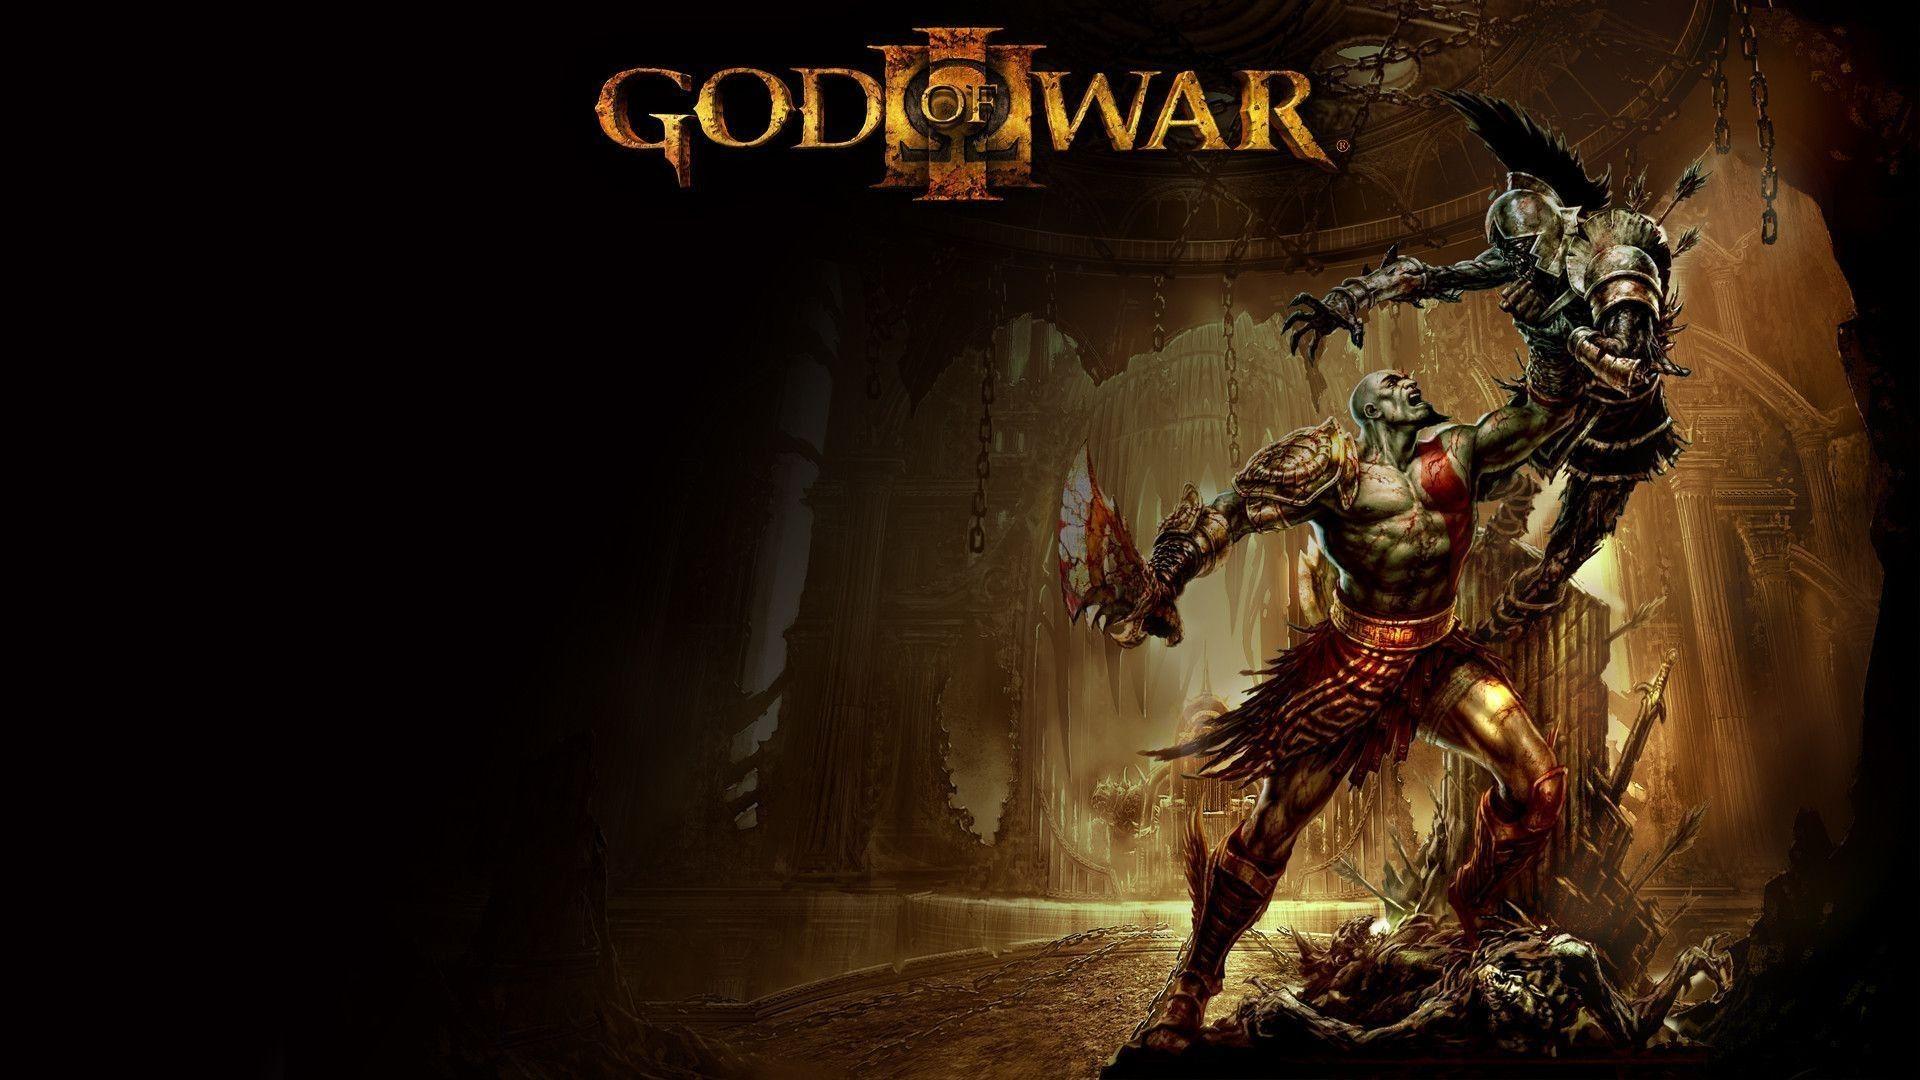 God of War wallpaper.com Wallpaper World